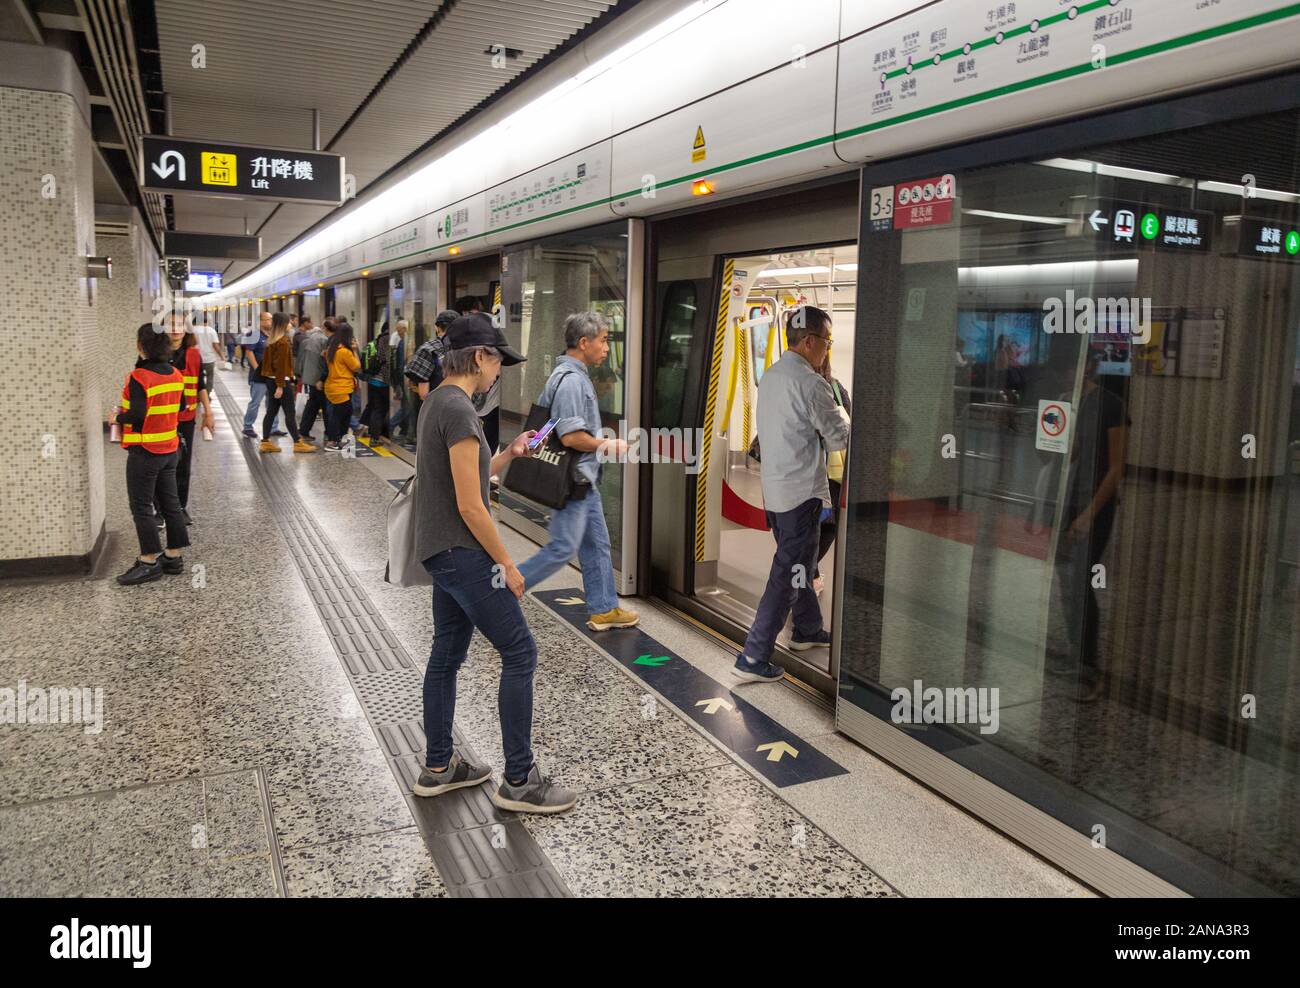 Hongkong MTR - Passagiere, die in einem Zug an einem Mass Transit Railway Station, Kowloon Hong Kong Asia, einsteigen Stockfoto